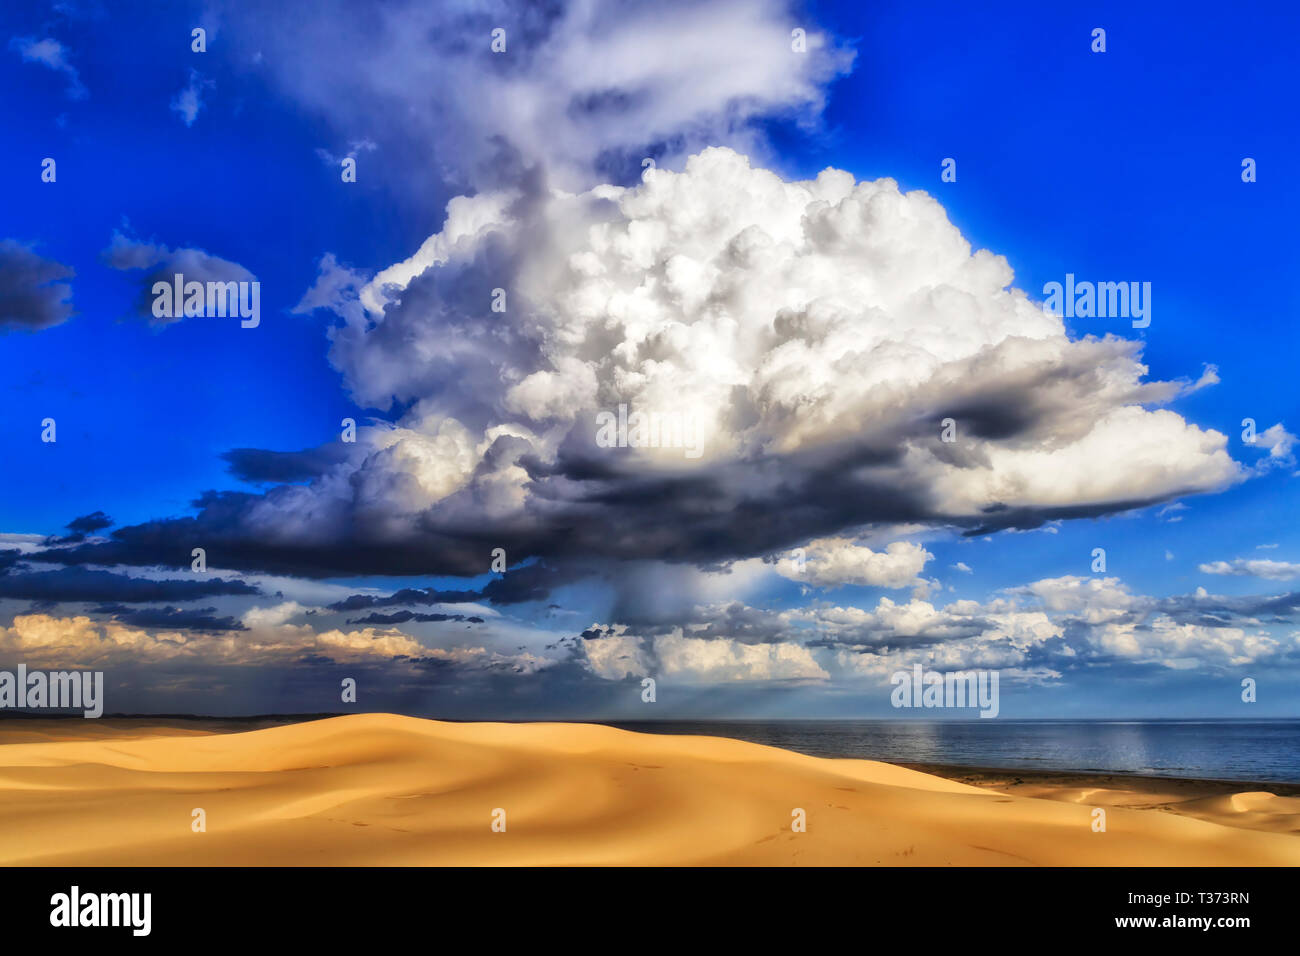 Turtle like shaped stormy rain cloud over sand dunes on Pacific coast of Australia in blue sky dropping rain to arid deserted Stockton beach. Stock Photo